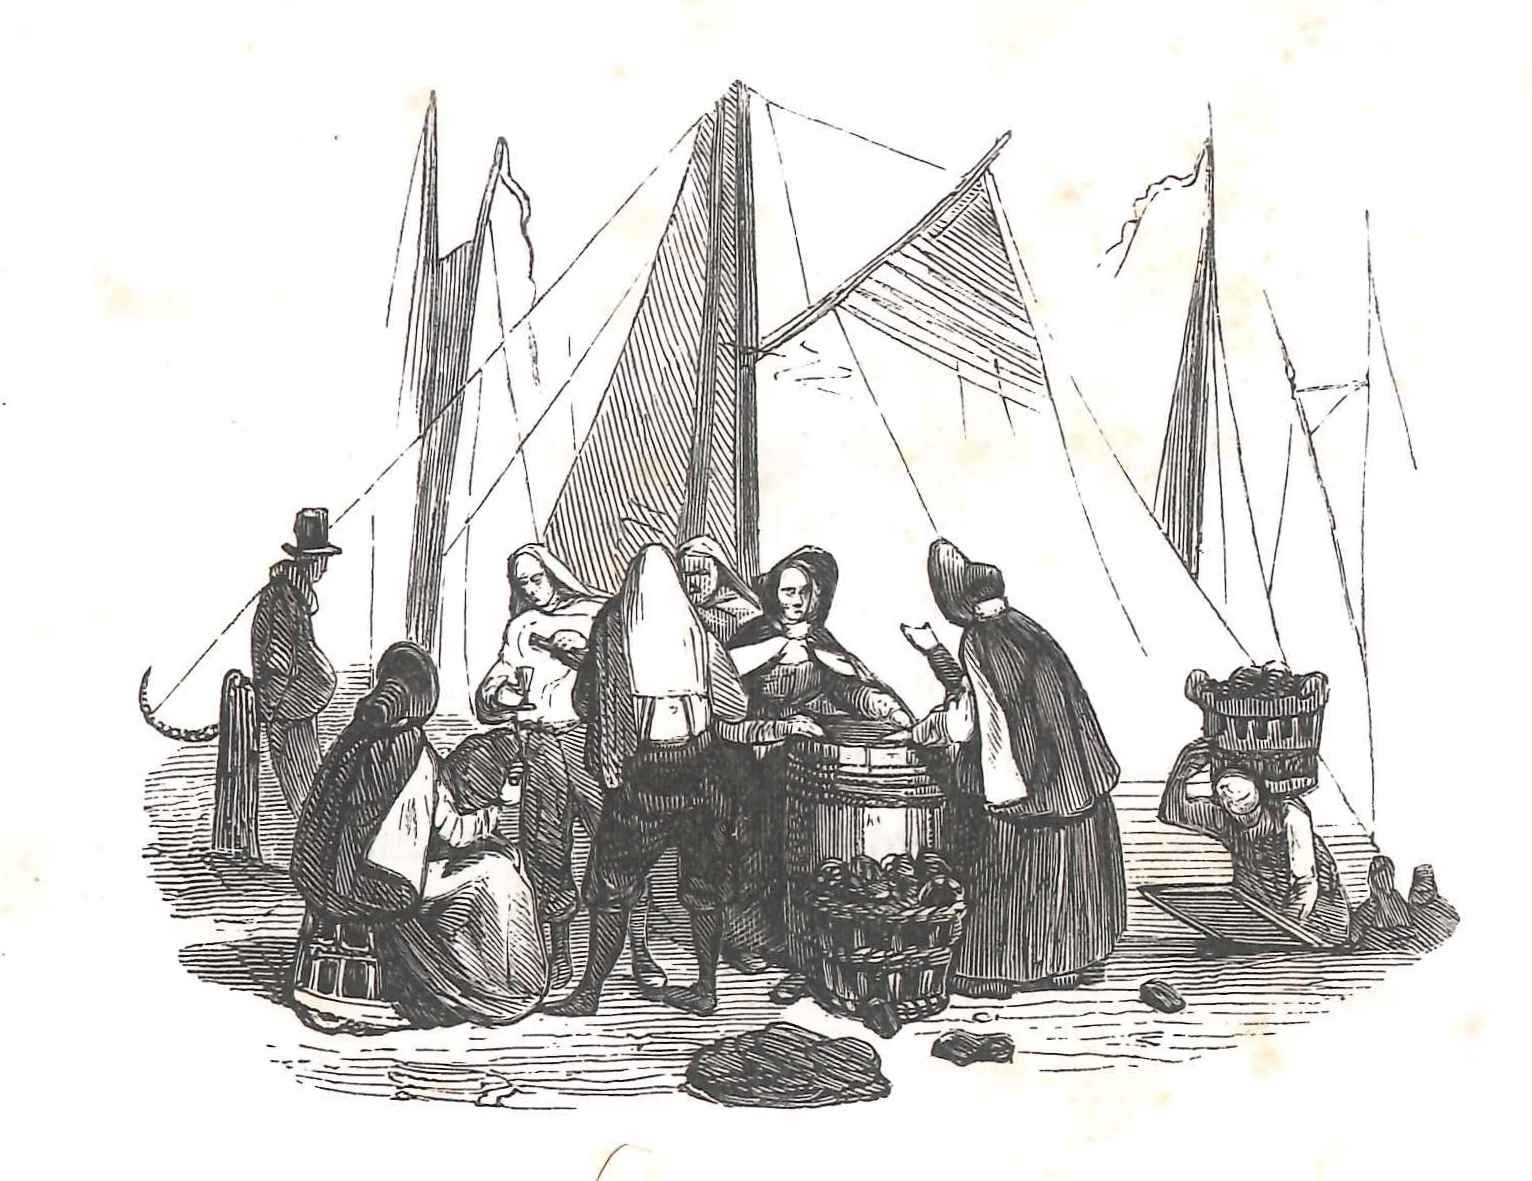  Rustpauze bij de Rotterdamse zakkedragers. 'Karakterschetsen', 1841. HMDB.